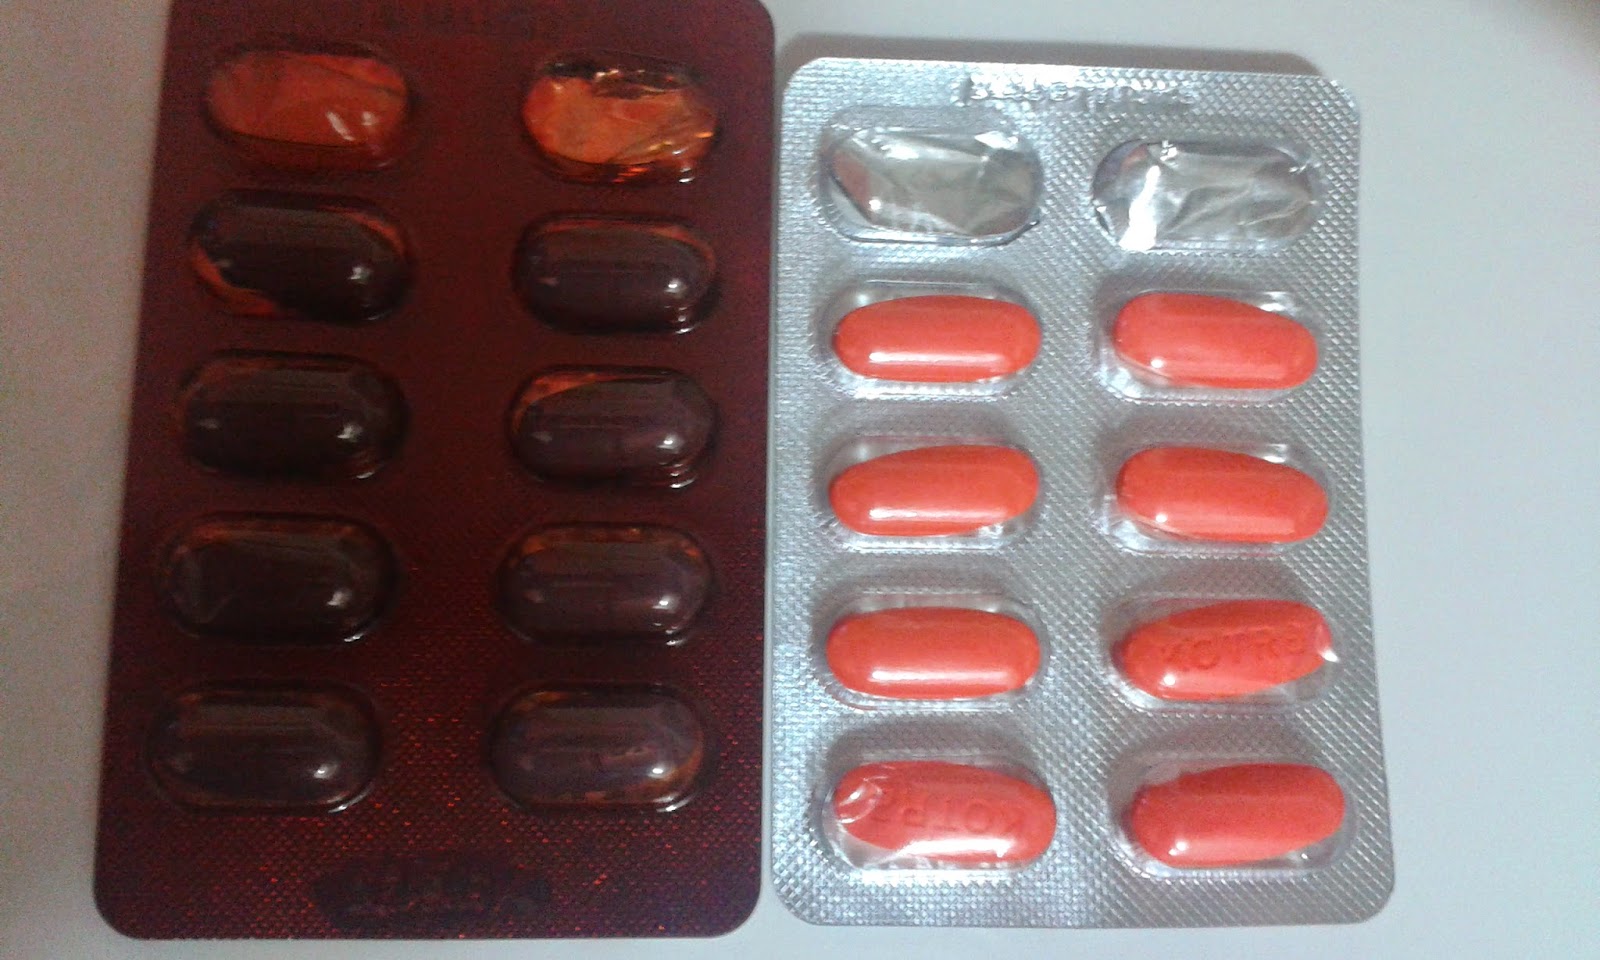 Ubat Antibiotik Erythromycin - Bertanya b